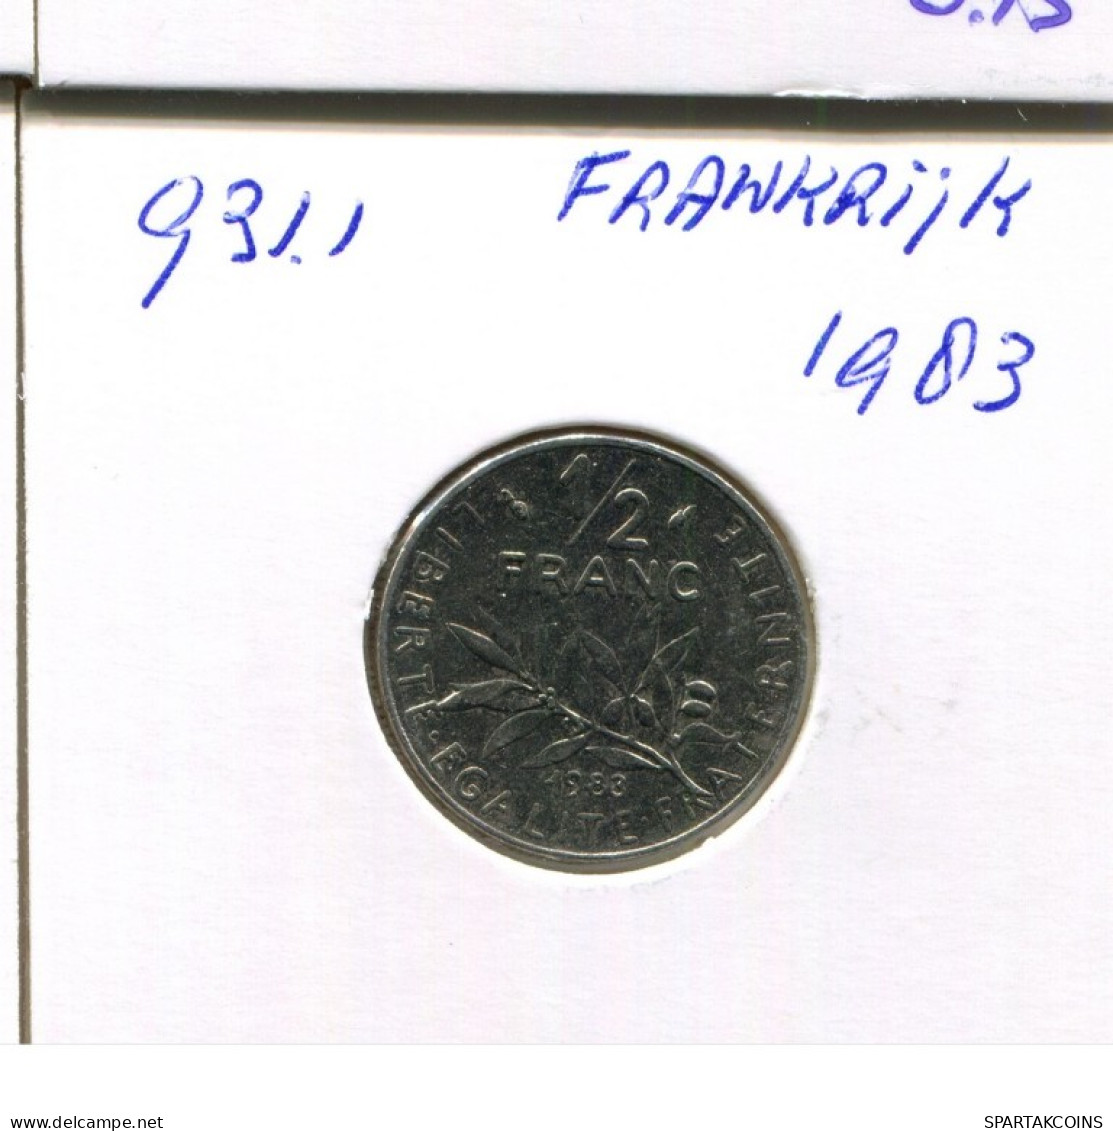 1/2 FRANC 1983 FRANCIA FRANCE Moneda #AN246.E.A - 1/2 Franc